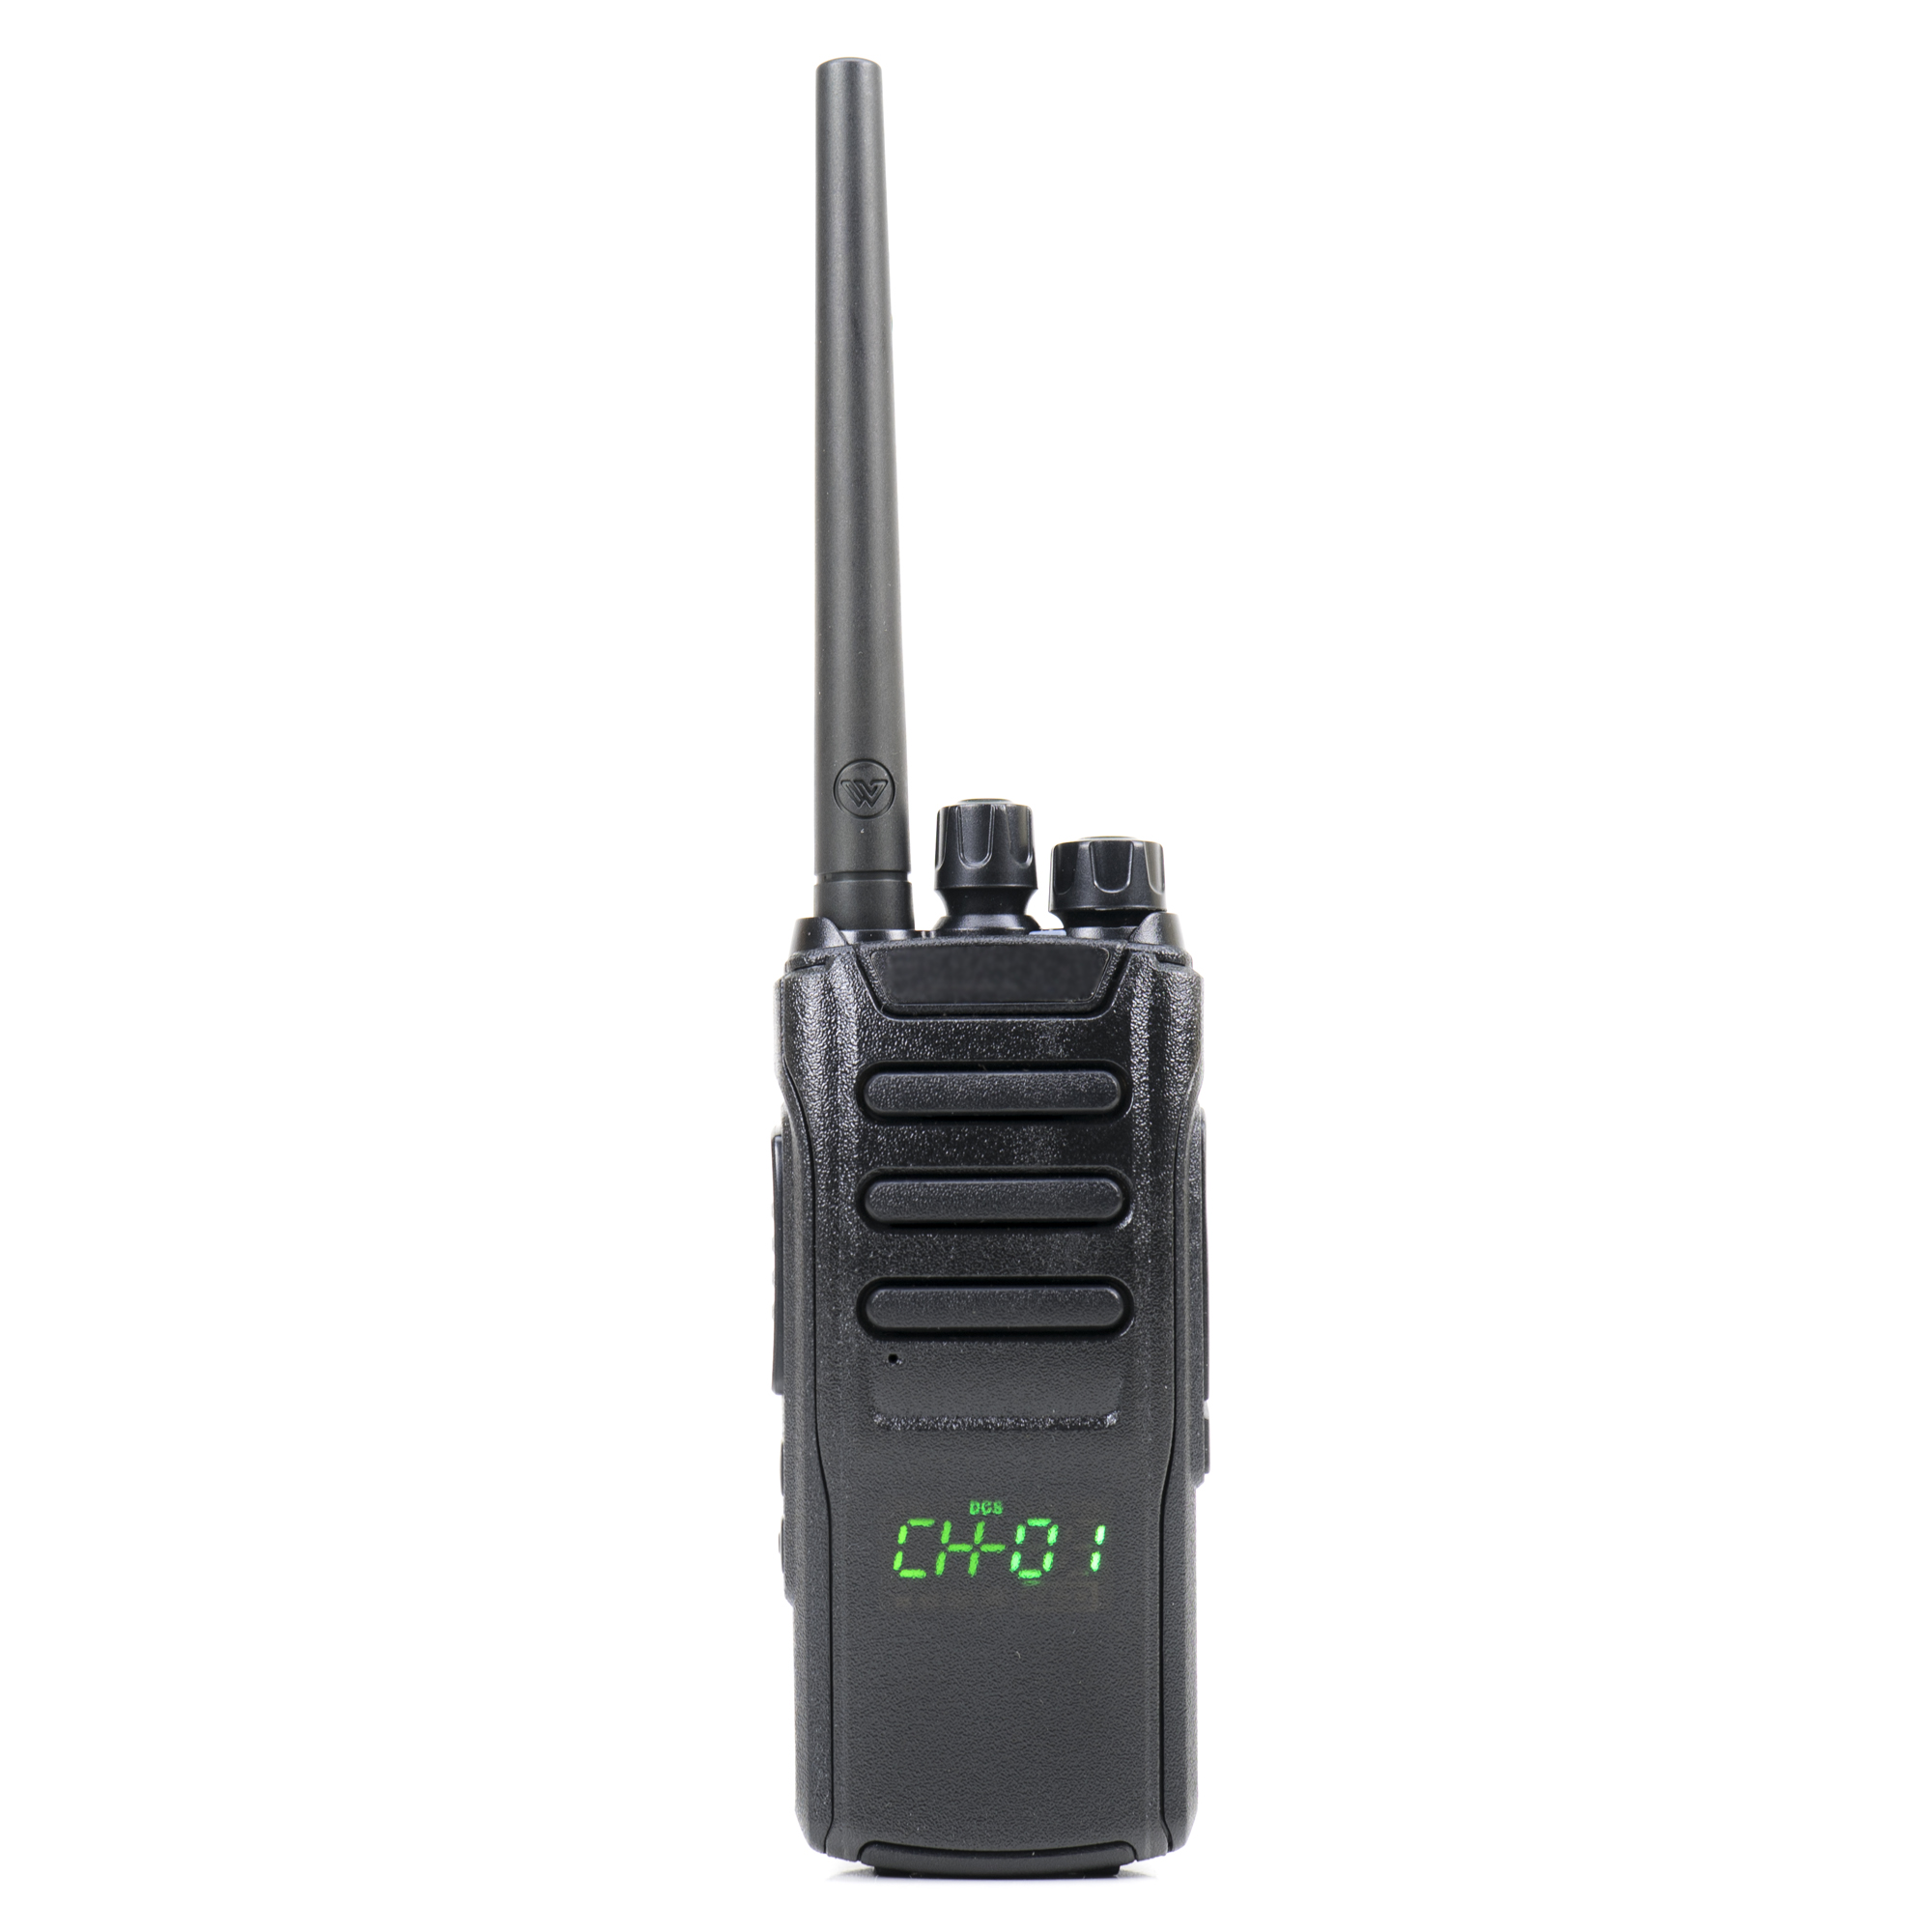 Statie radio portabila PNI PMR R100, 0.5W, Scan, TOT, VOX